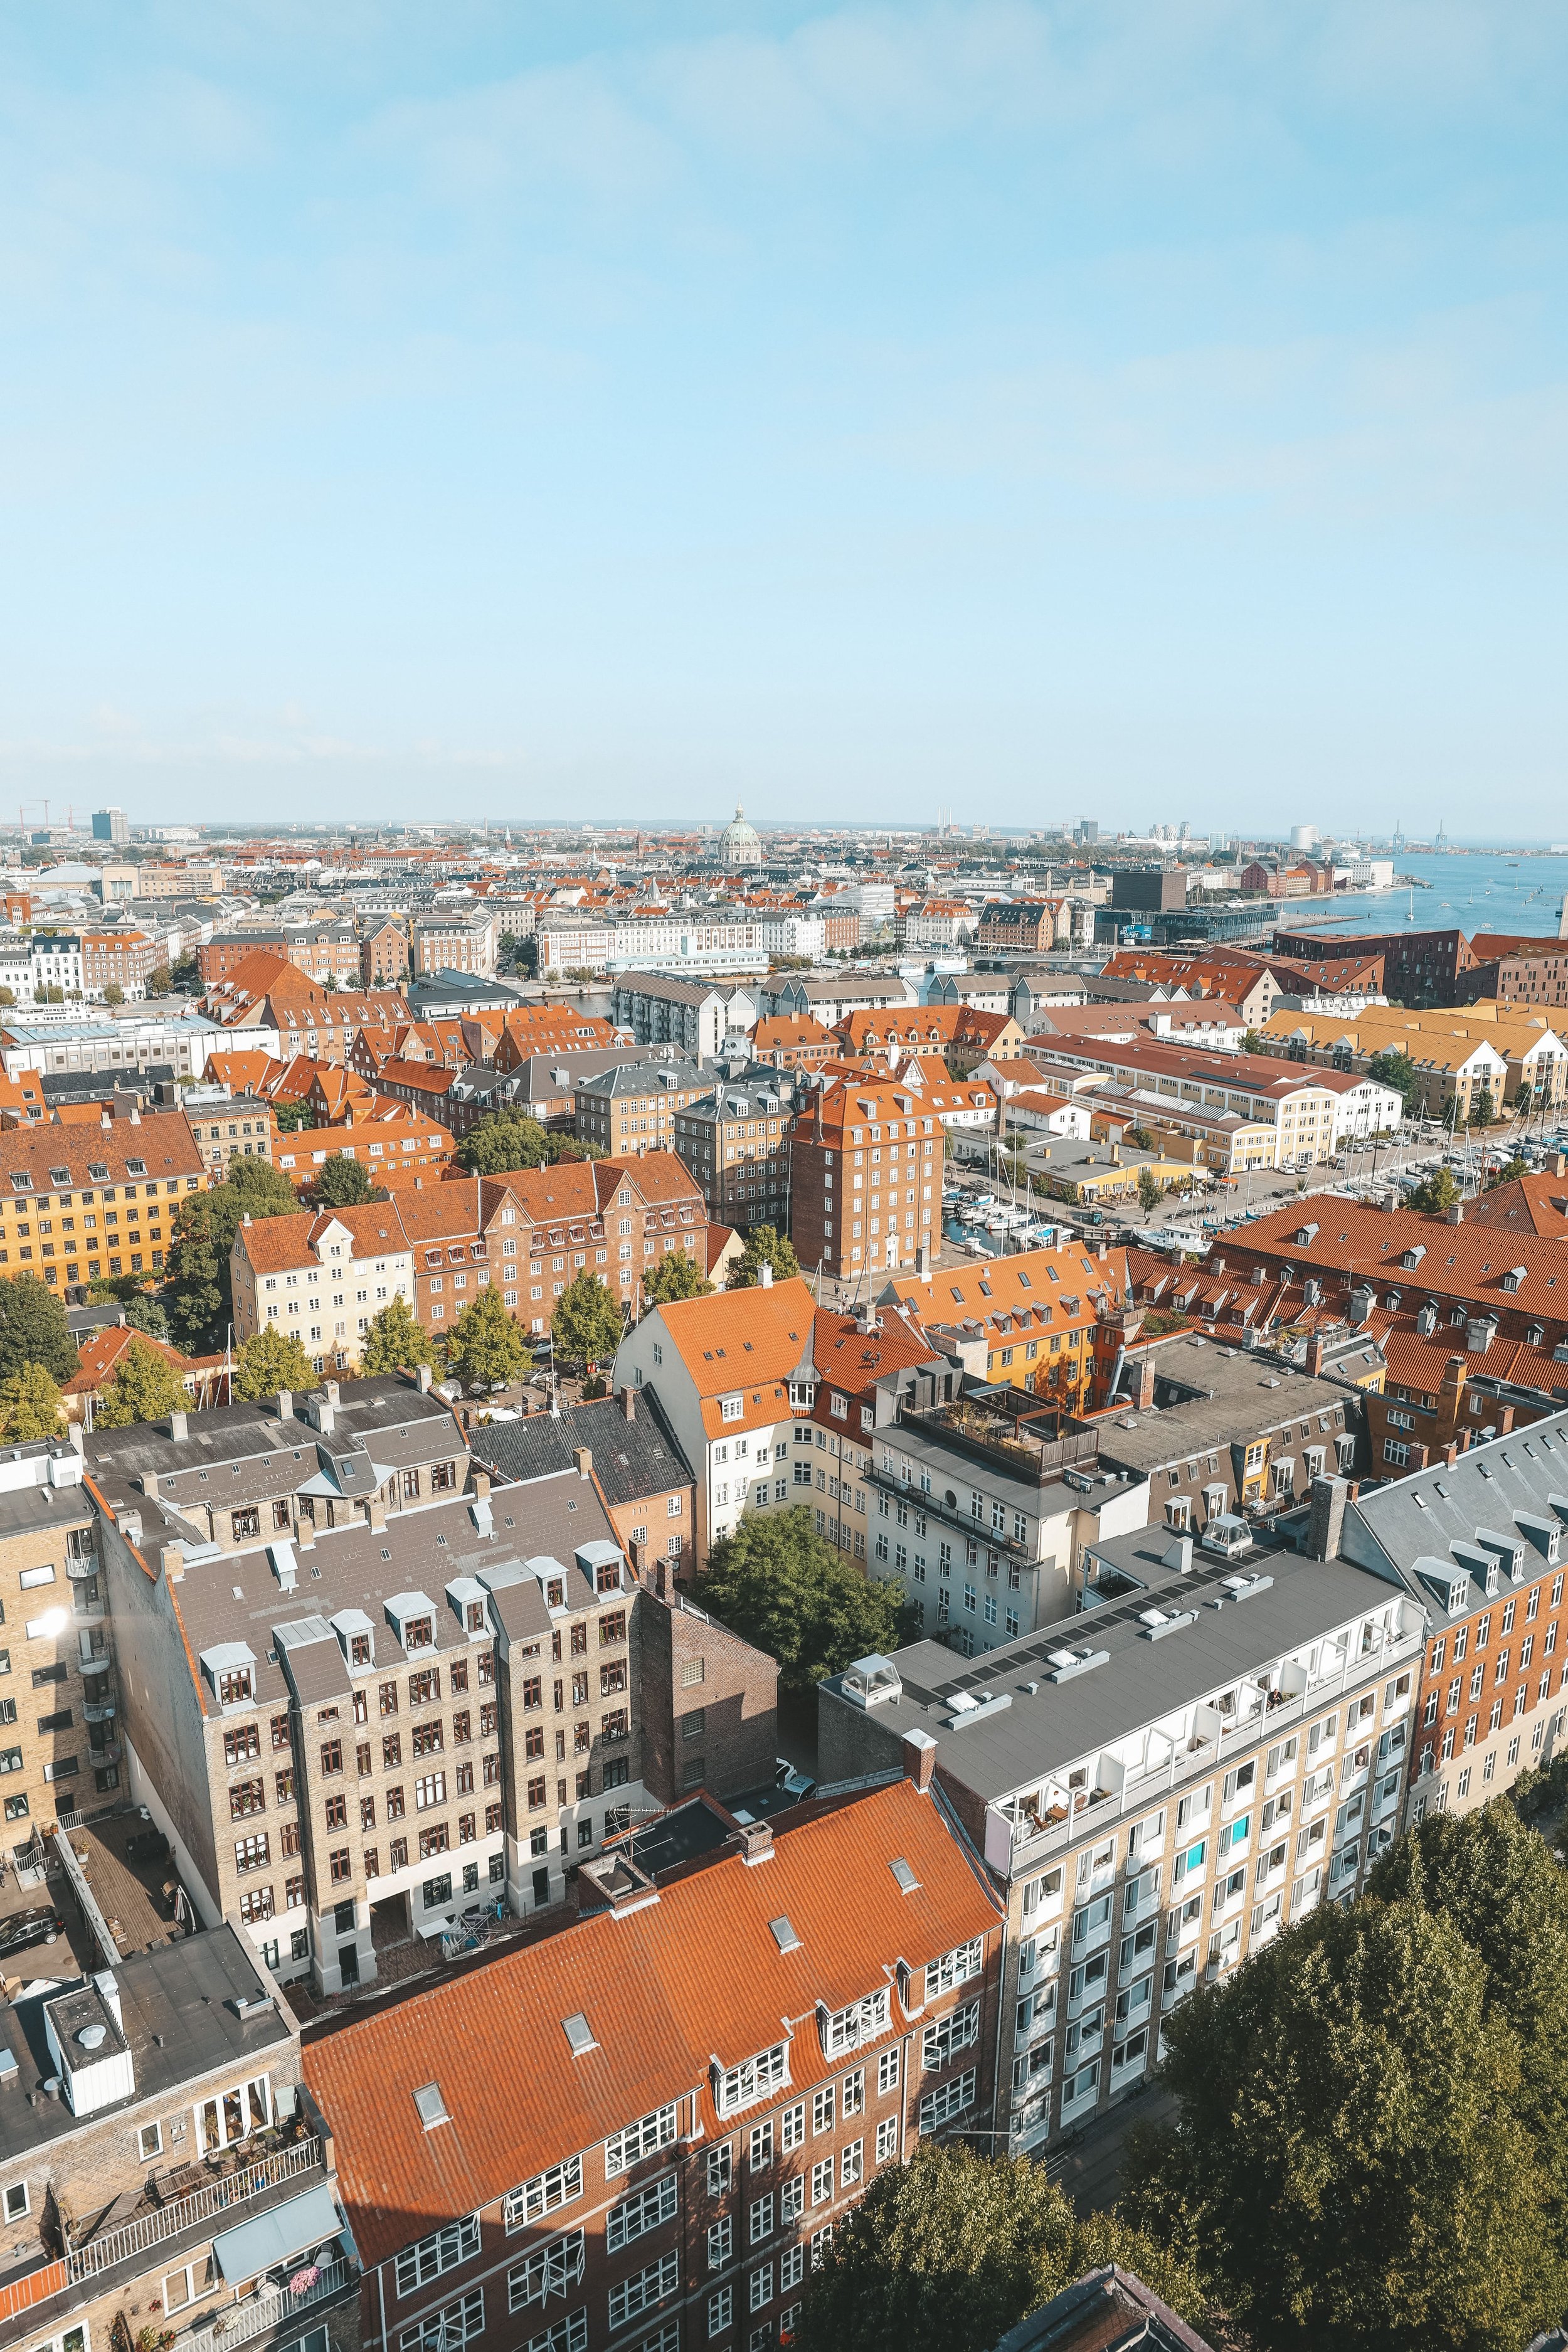 City views - Church of the Saviour - Copenhagen - Denmark